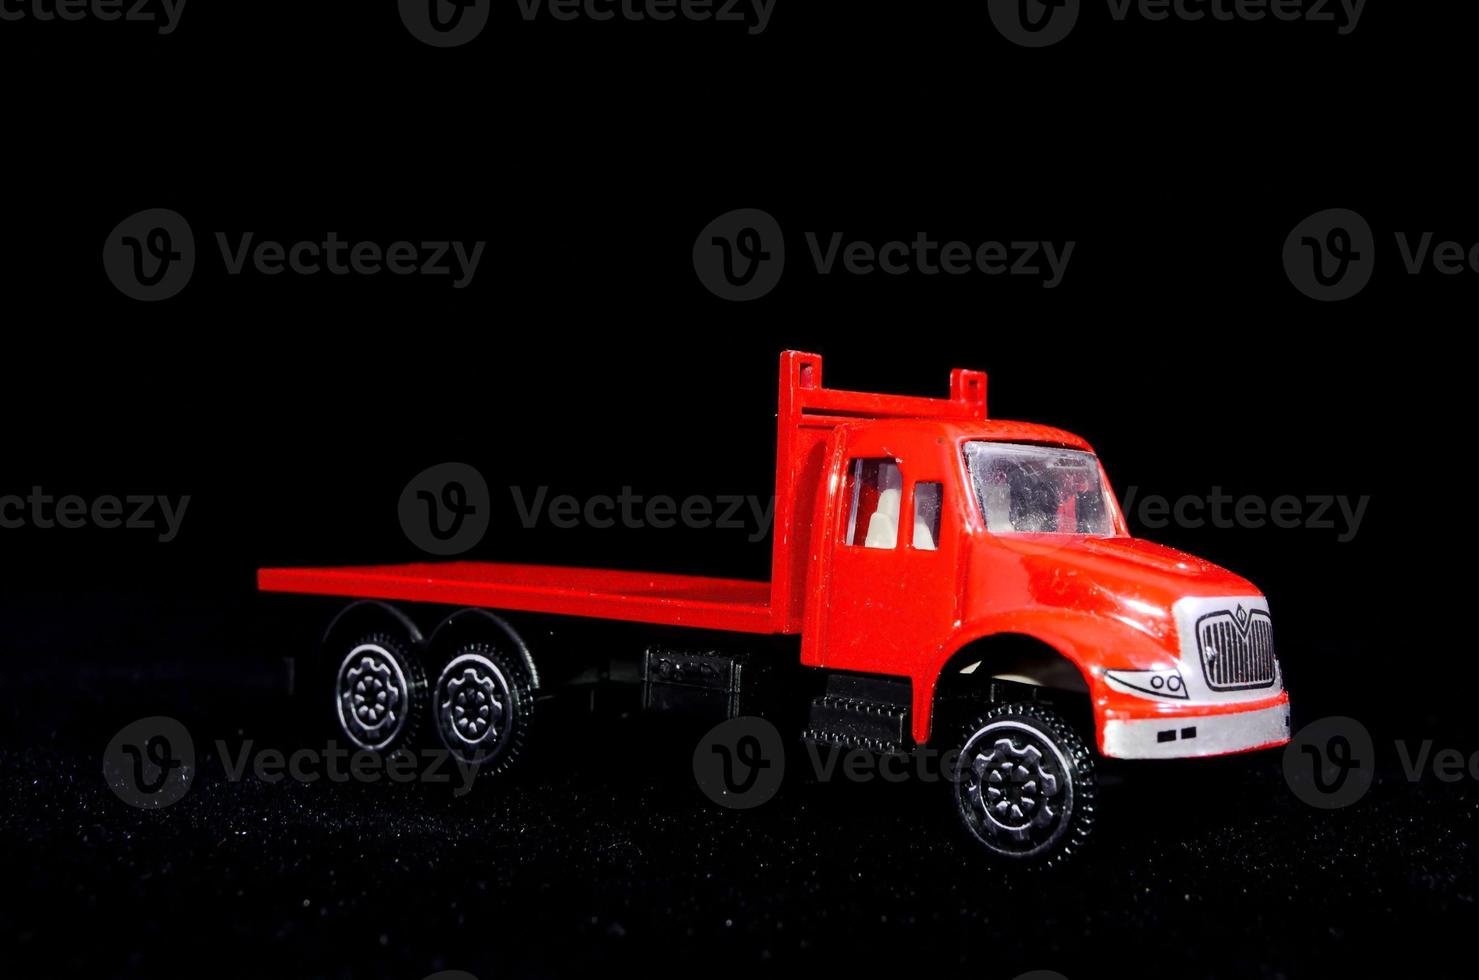 rood speelgoed- vrachtauto detailopname foto